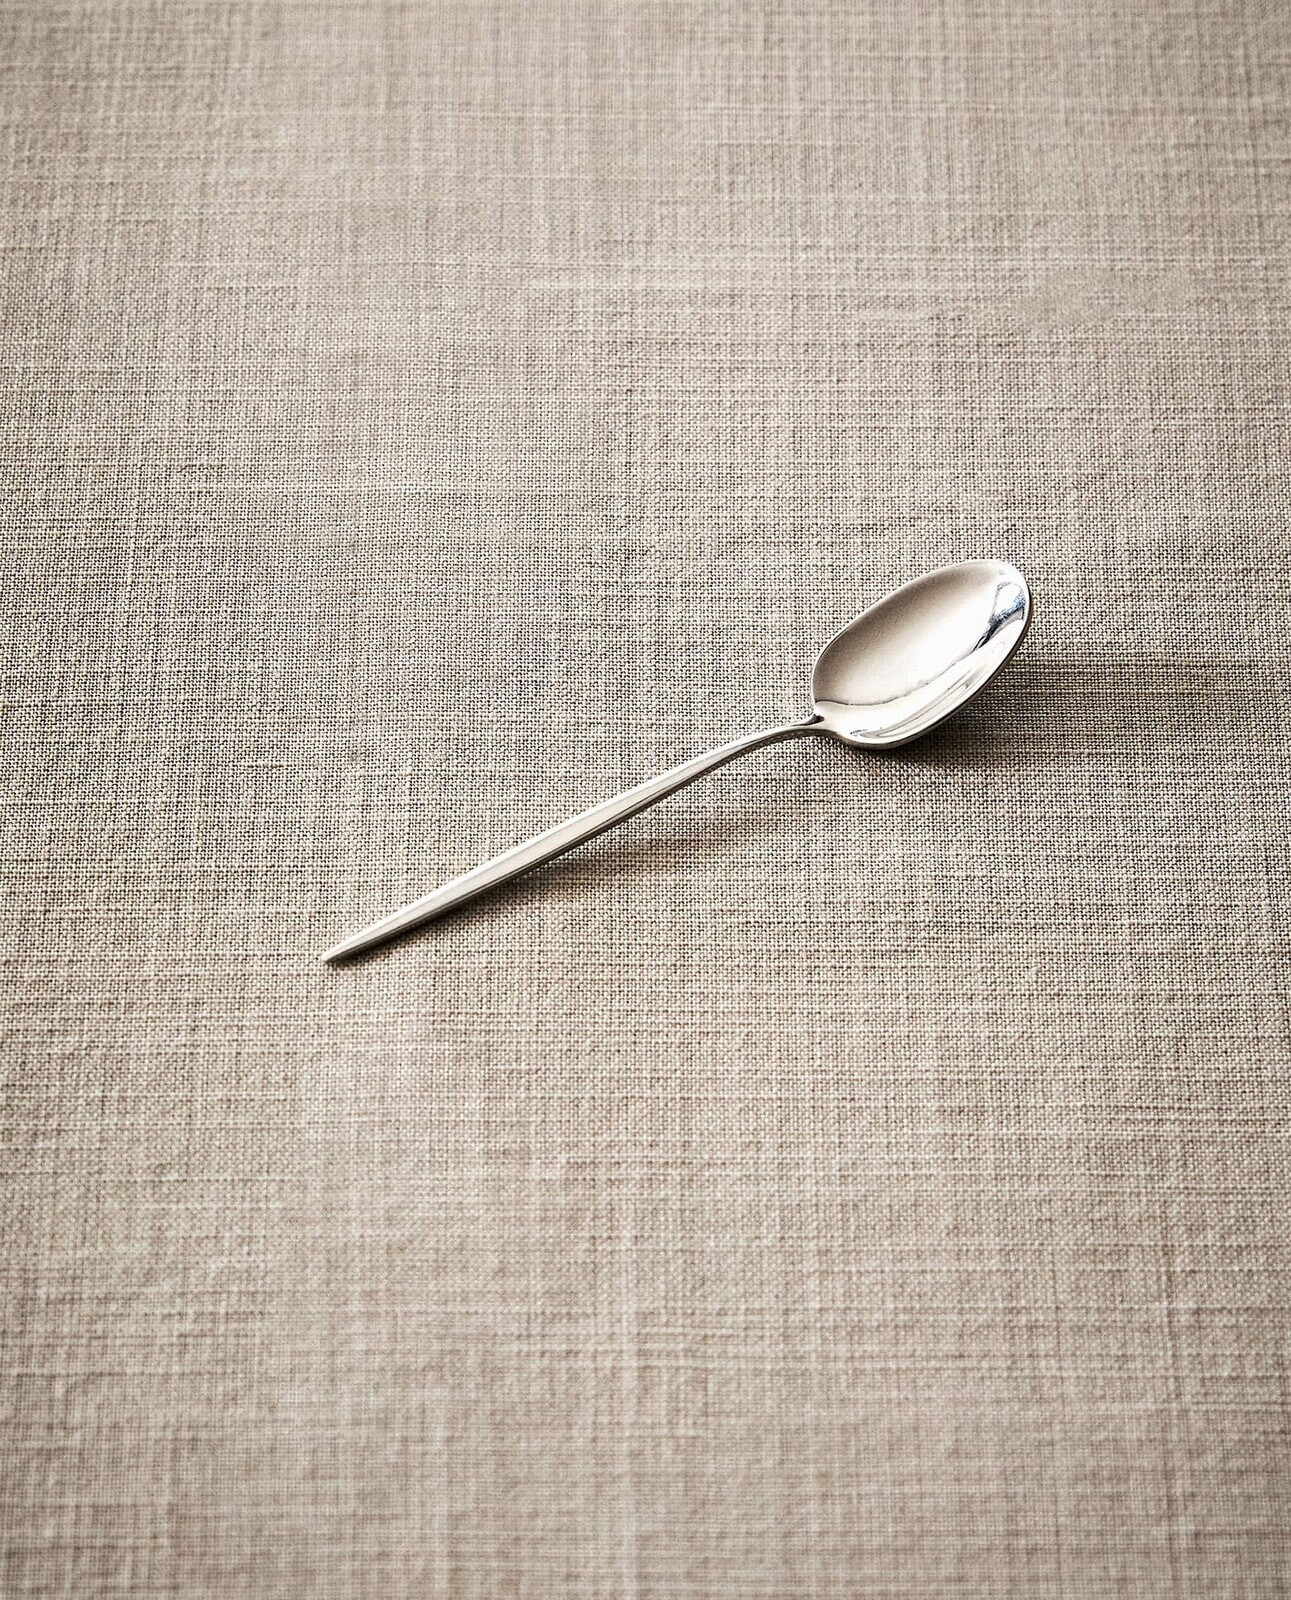 Teaspoon with extra-fine handle